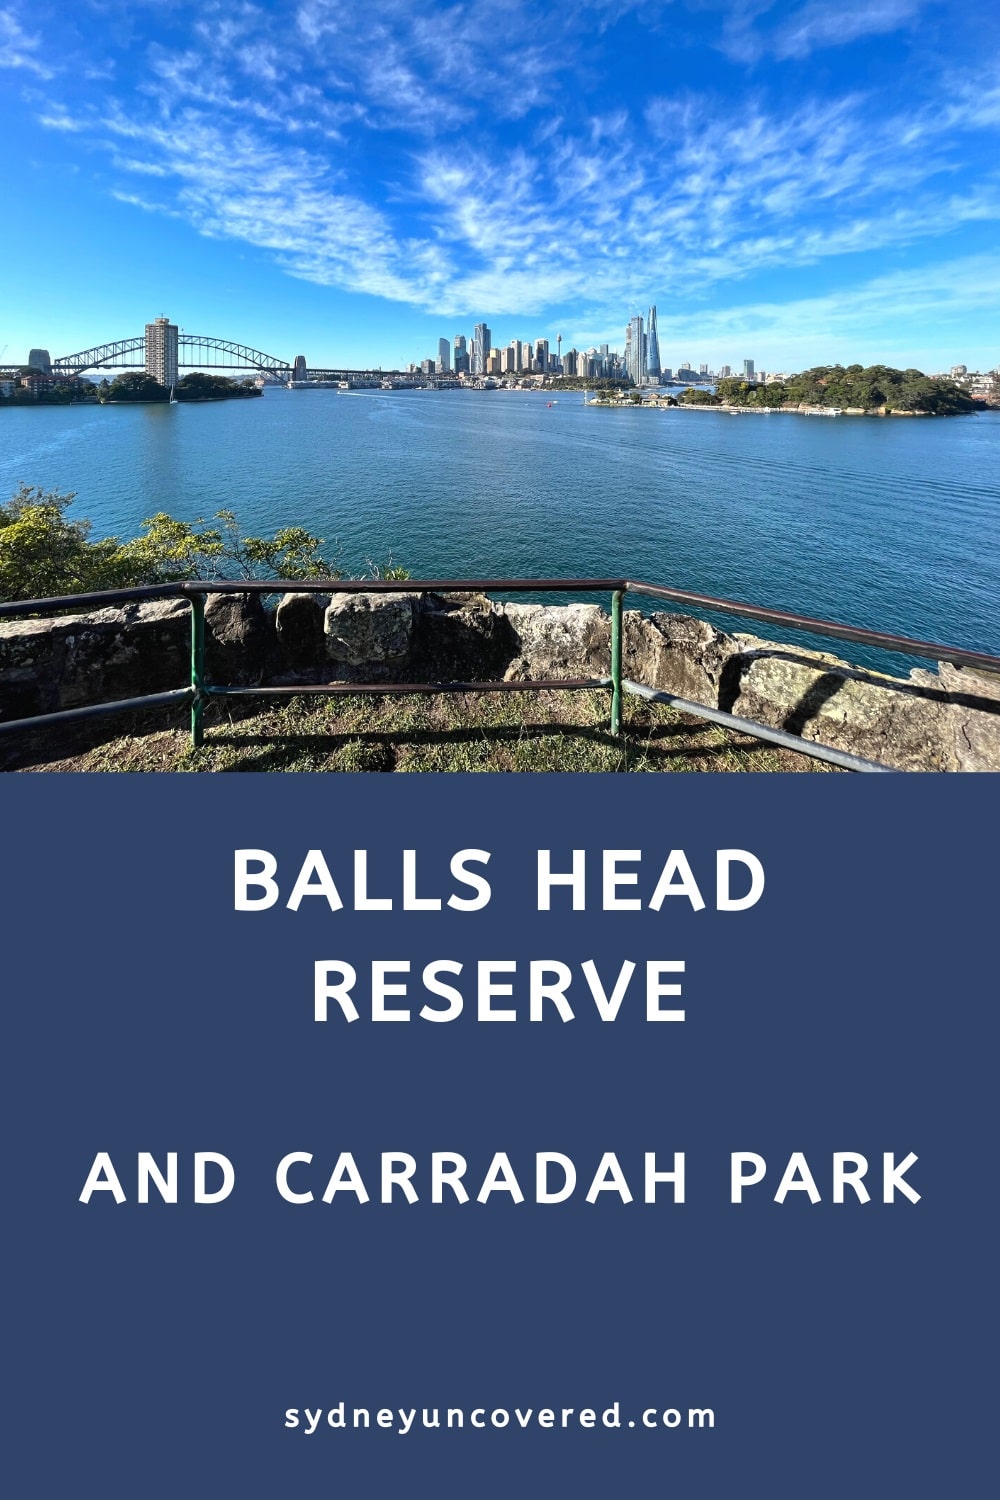 Balls Head Reserve and Carradah Park in Waverton